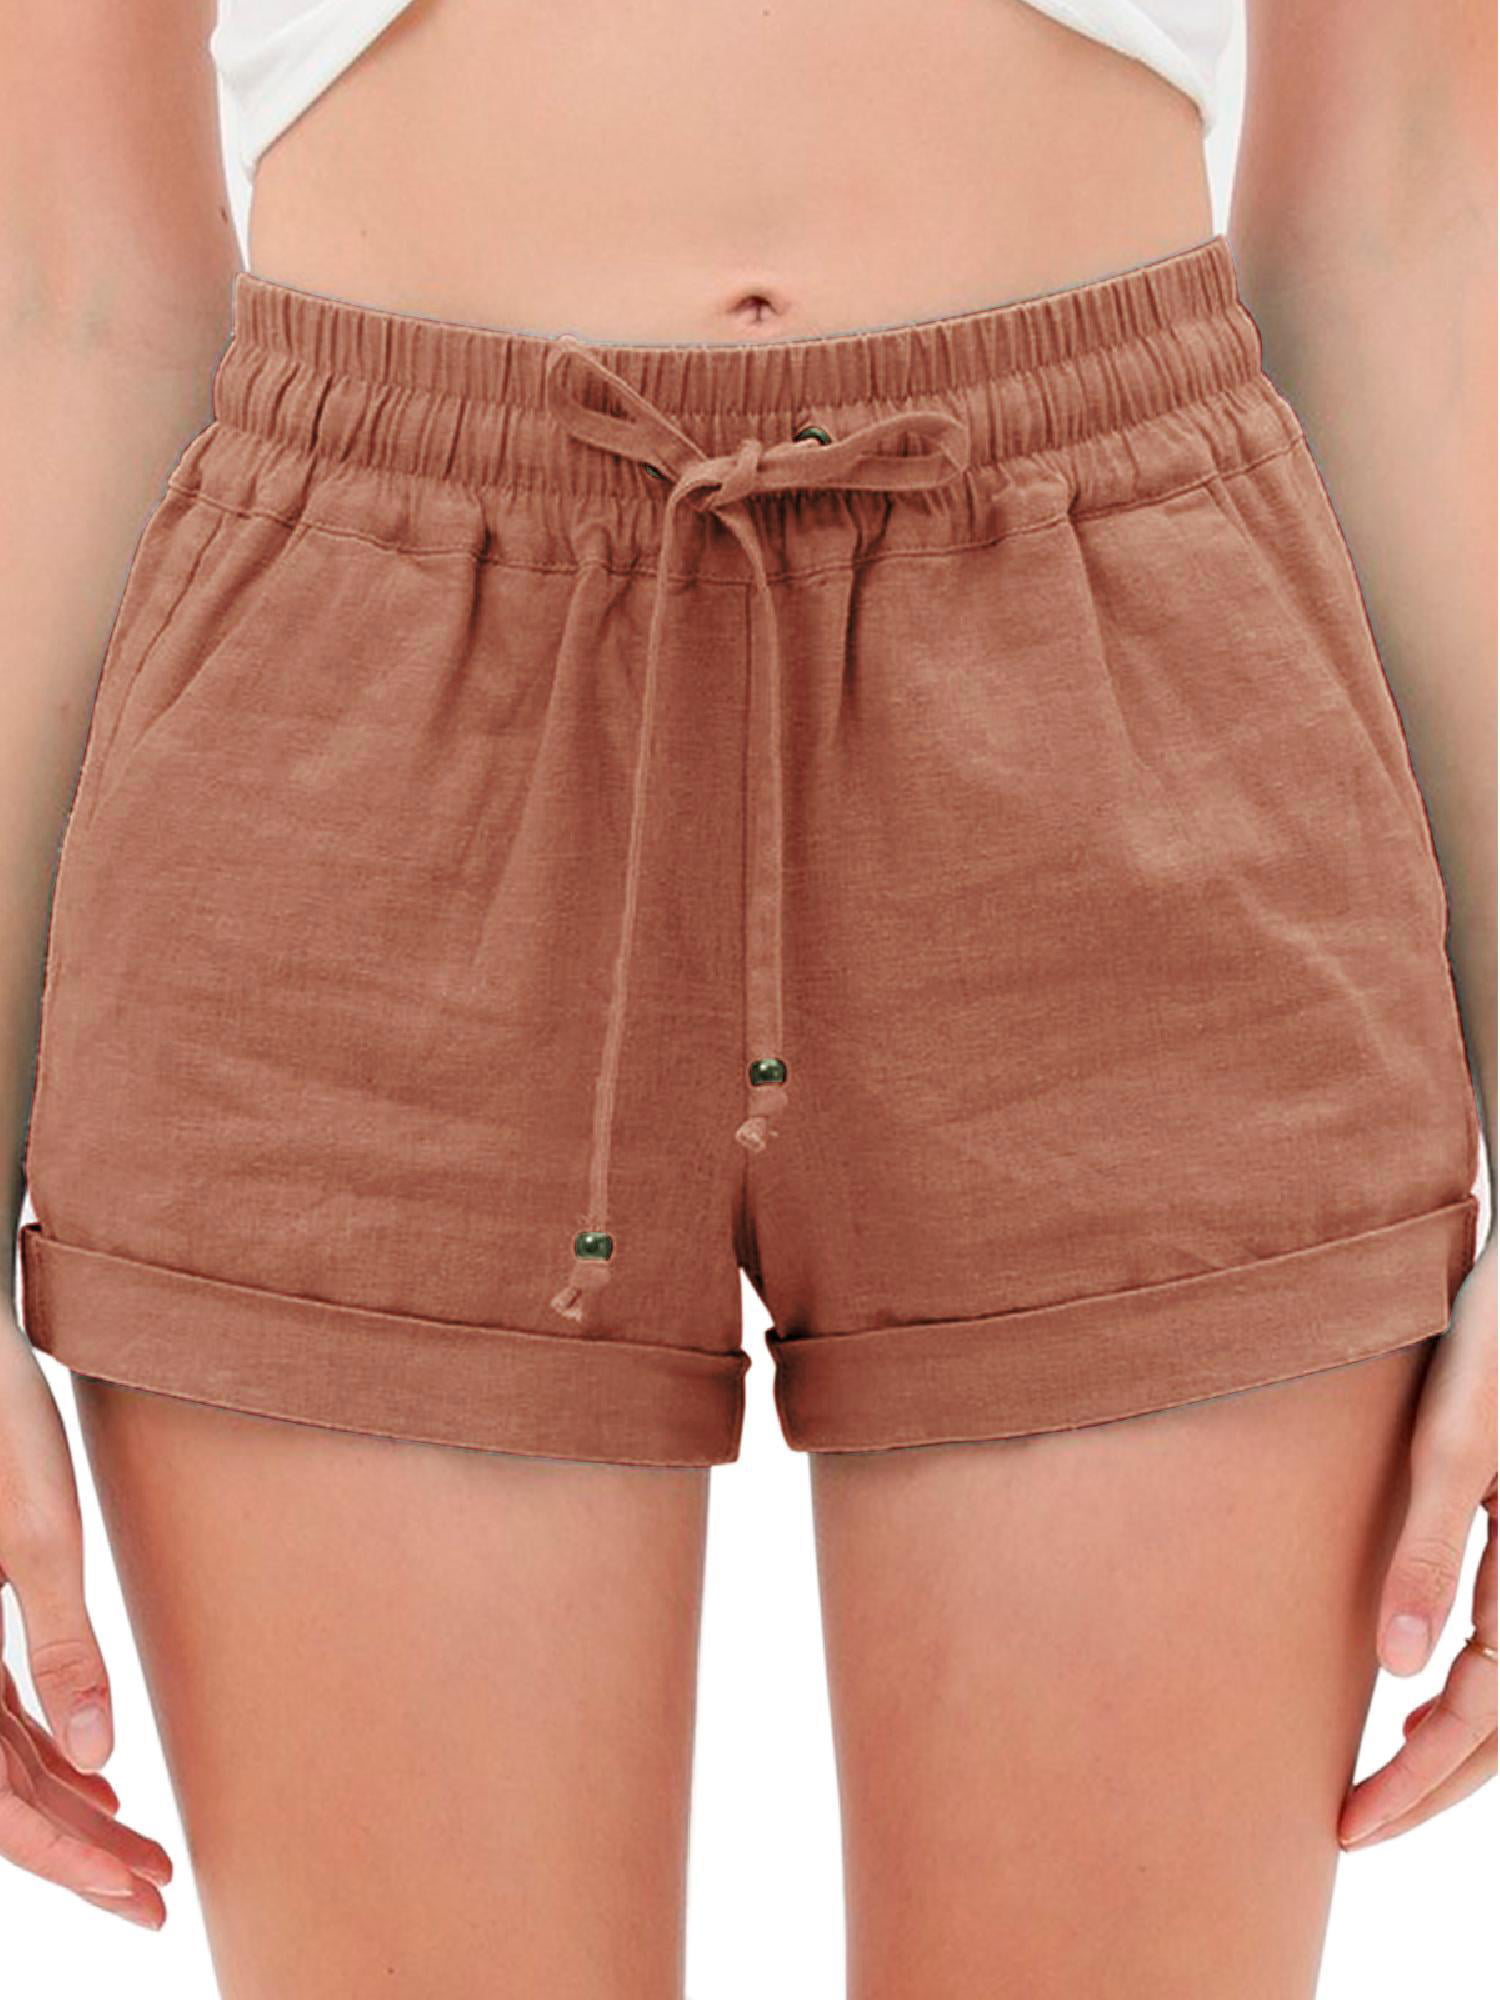 aihihe Plus Size Shorts for Womens Drawstring Elastic Waist Casual Comfy Cotton Linen Beach Shorts 